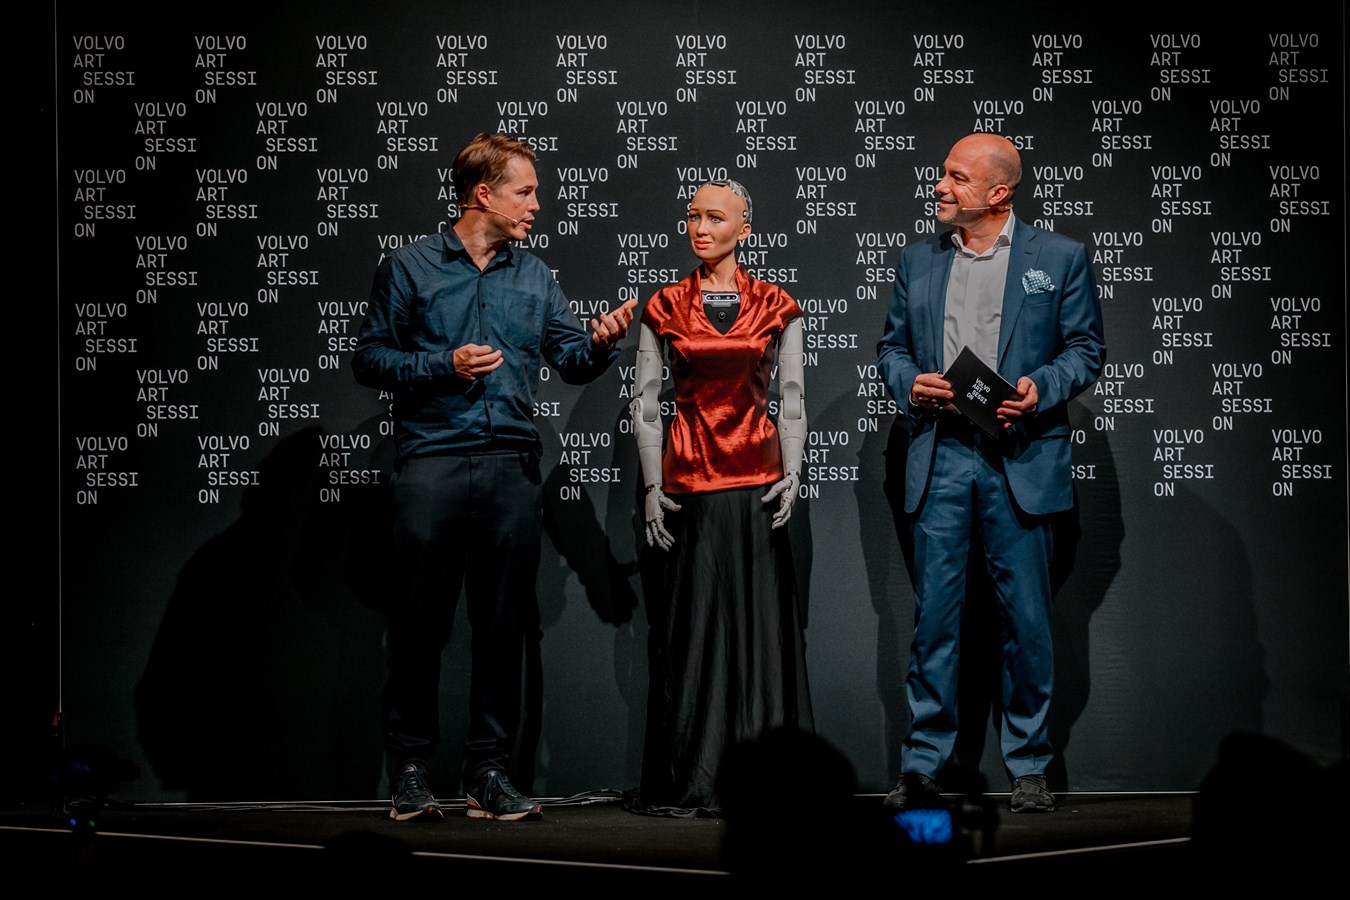 Volvo Art Session 2018: Stephan Sigrist, Sophia, Eric Krapf 